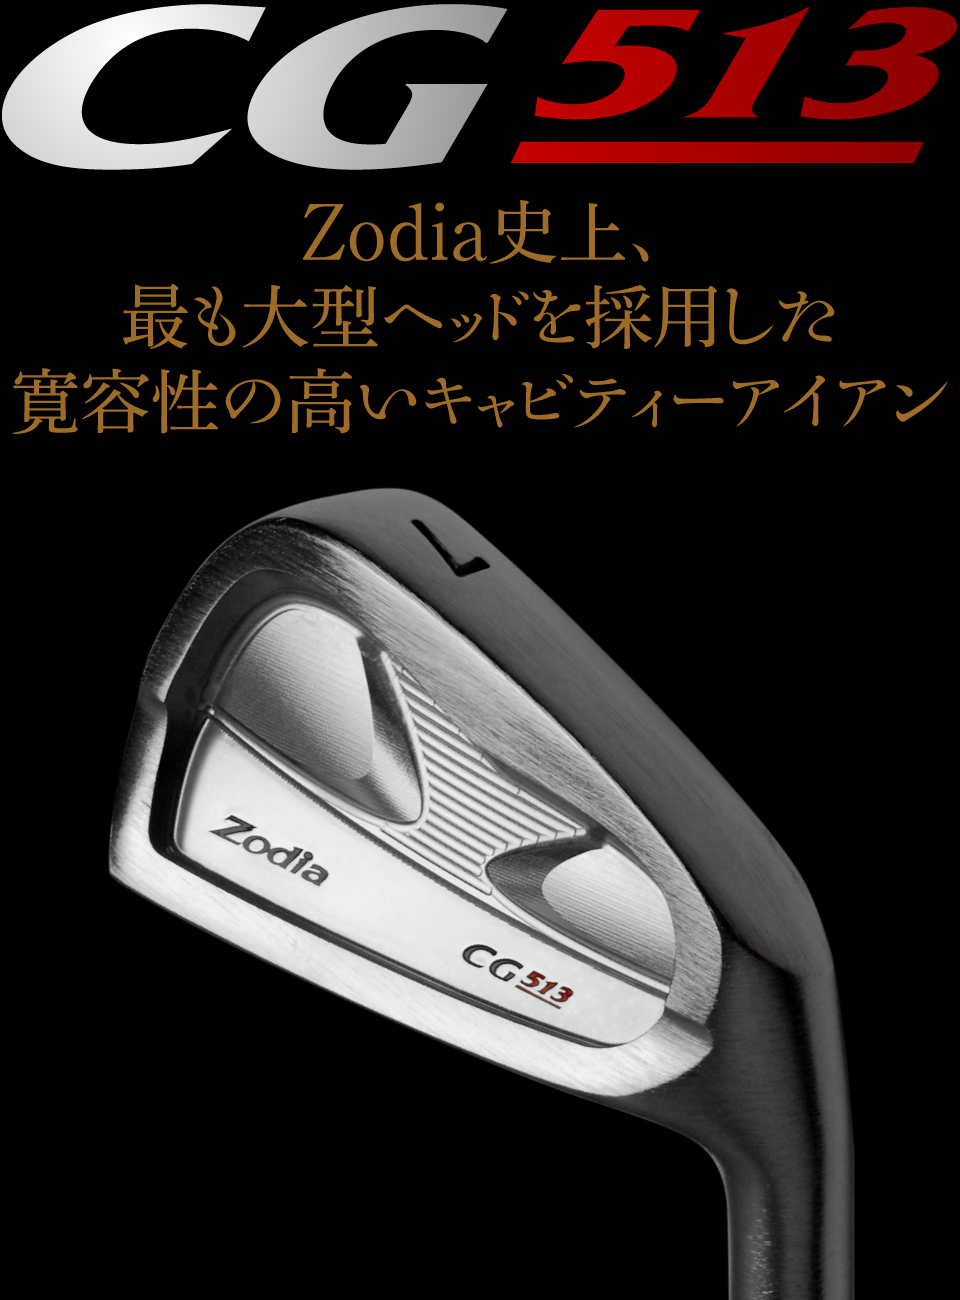 CG513 – 製品情報 – Zodia（ゾディア） 公式サイト